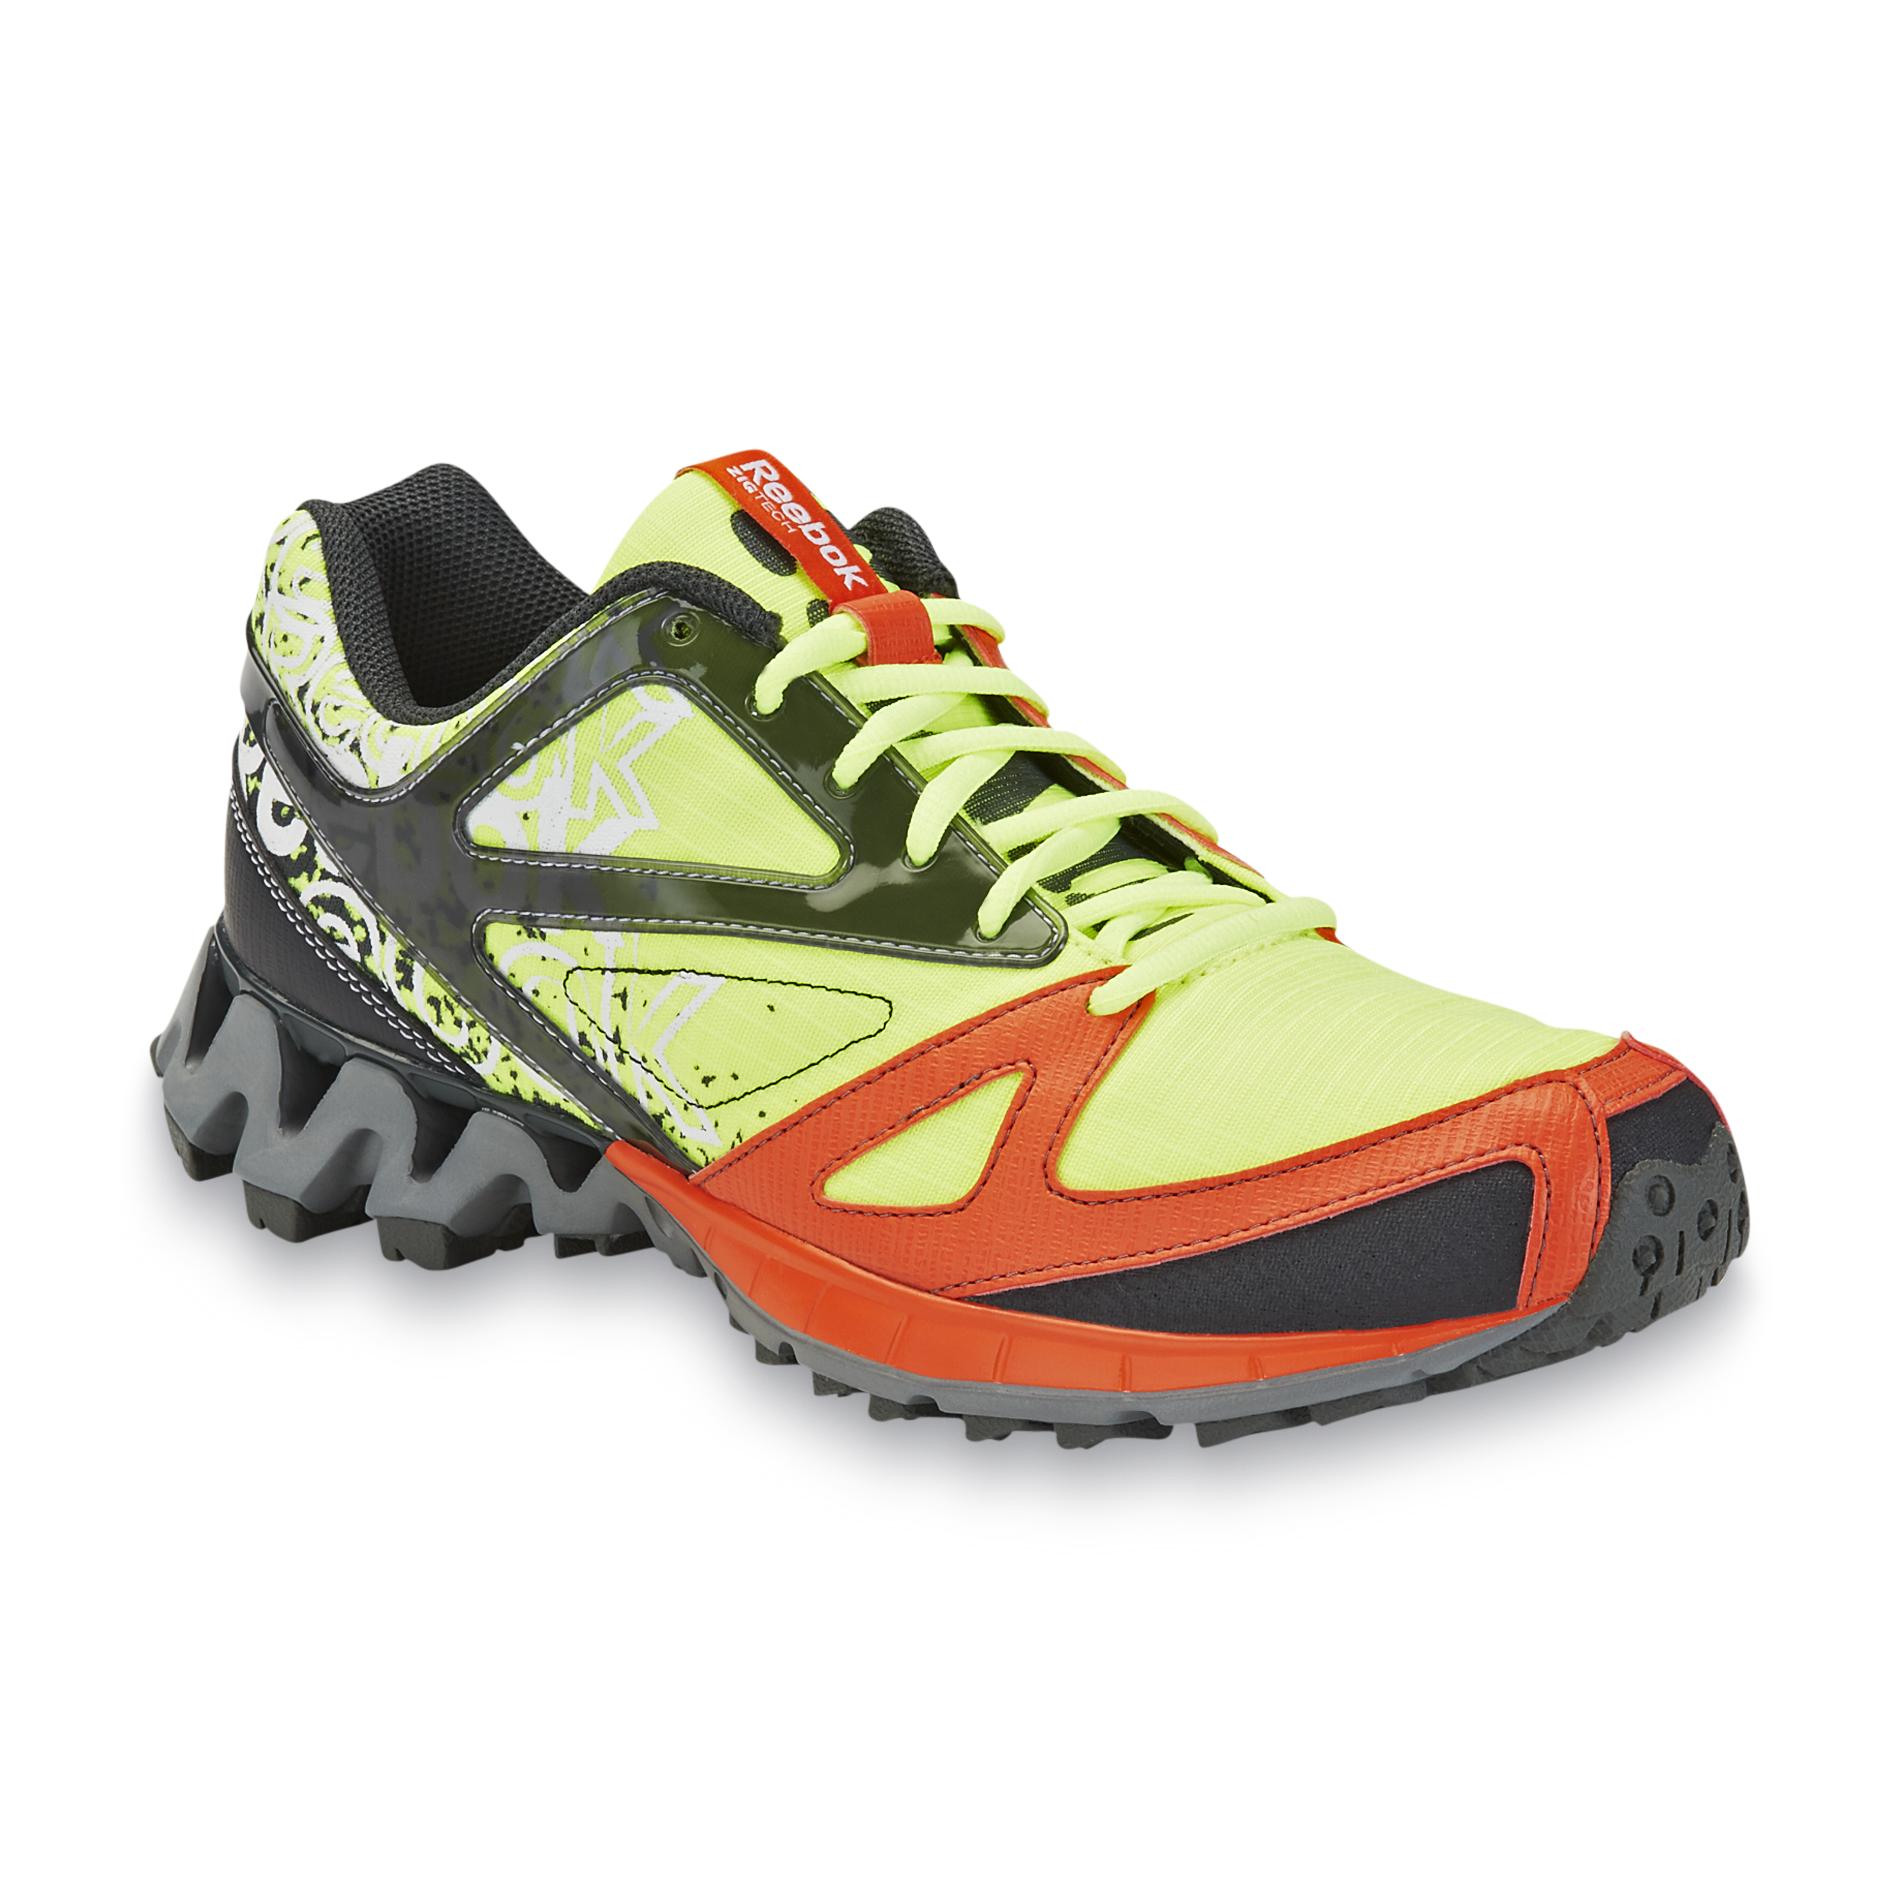 Reebok Men's Zigkick Trail 1.0 Neon Green/Orange/Gray Running Shoe